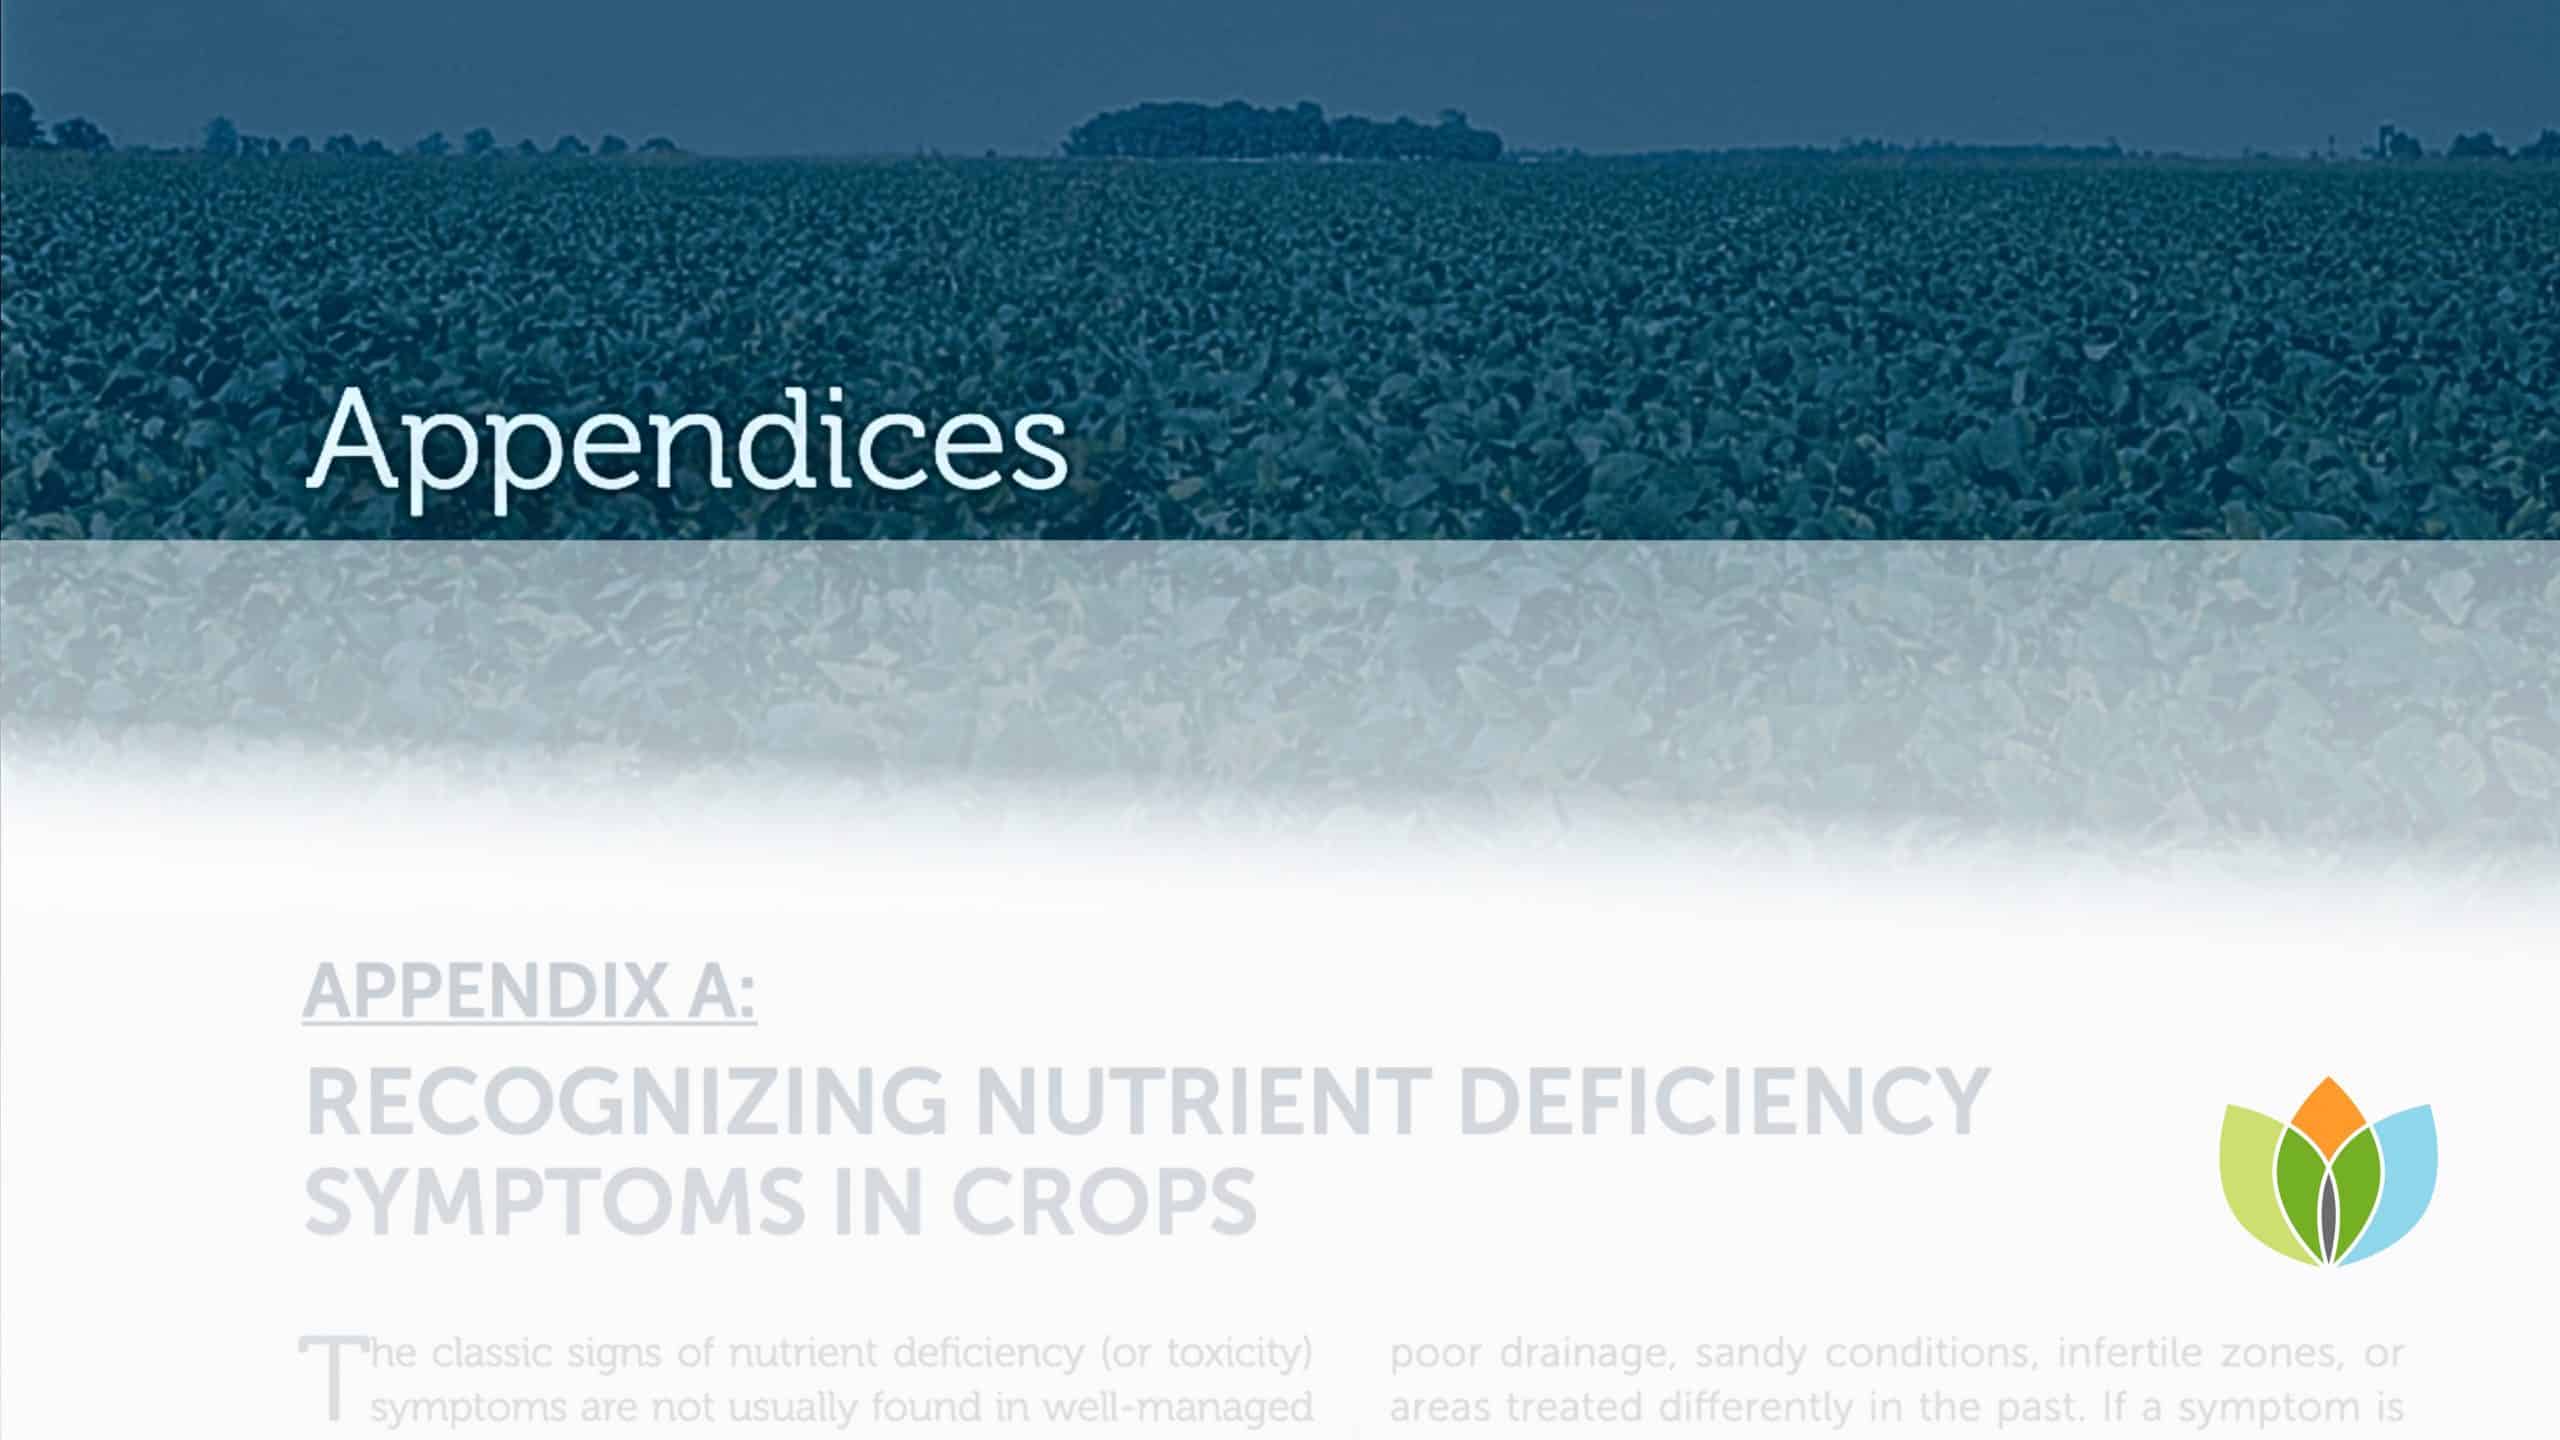 Recognizing Nutrient Deficiency Symptoms in Crops